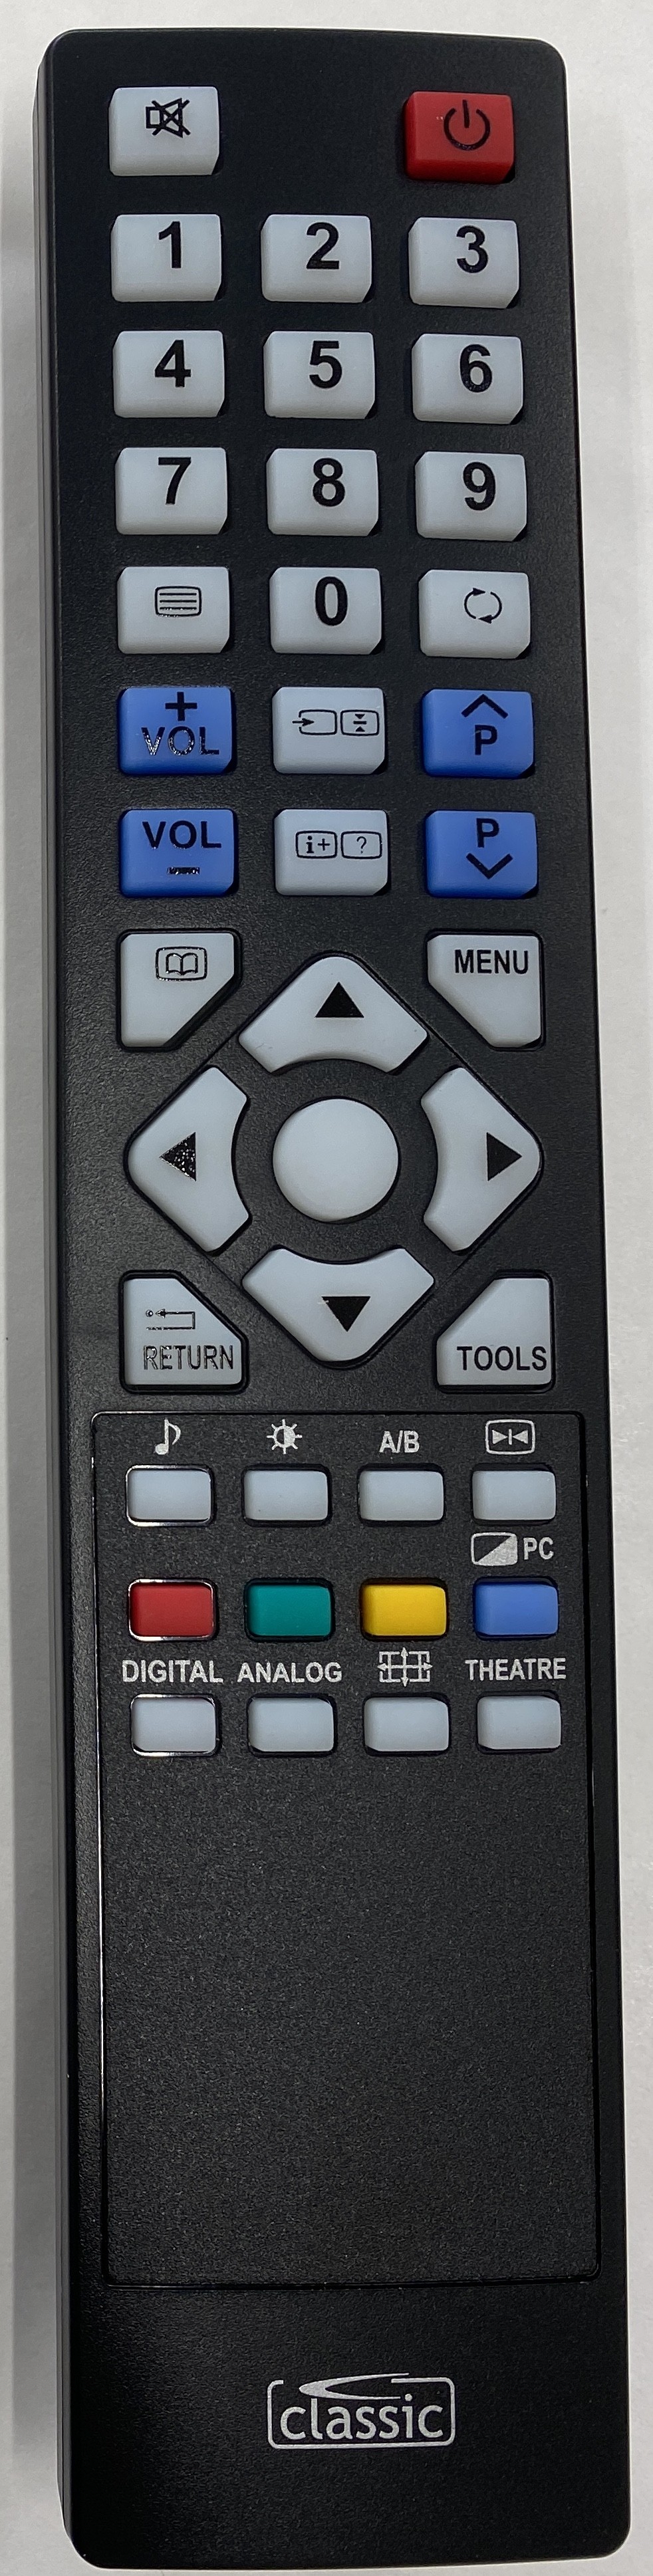 Sony RM-ED009L Remote Control